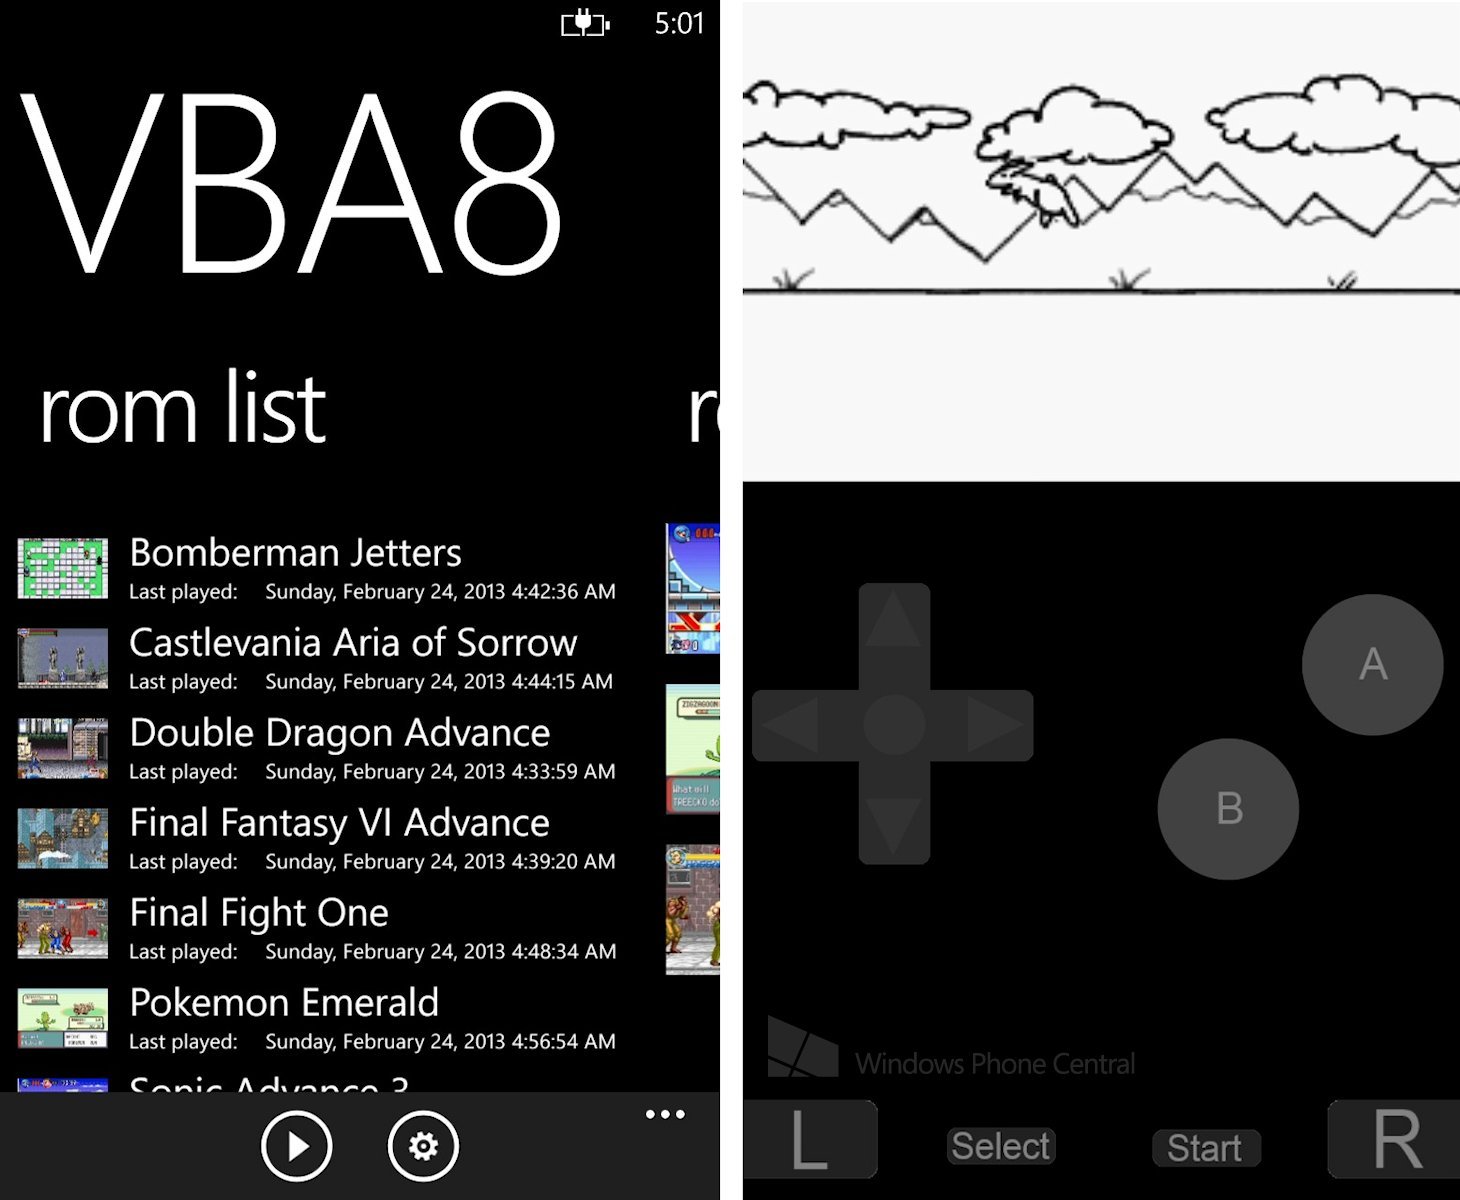 vba8 app